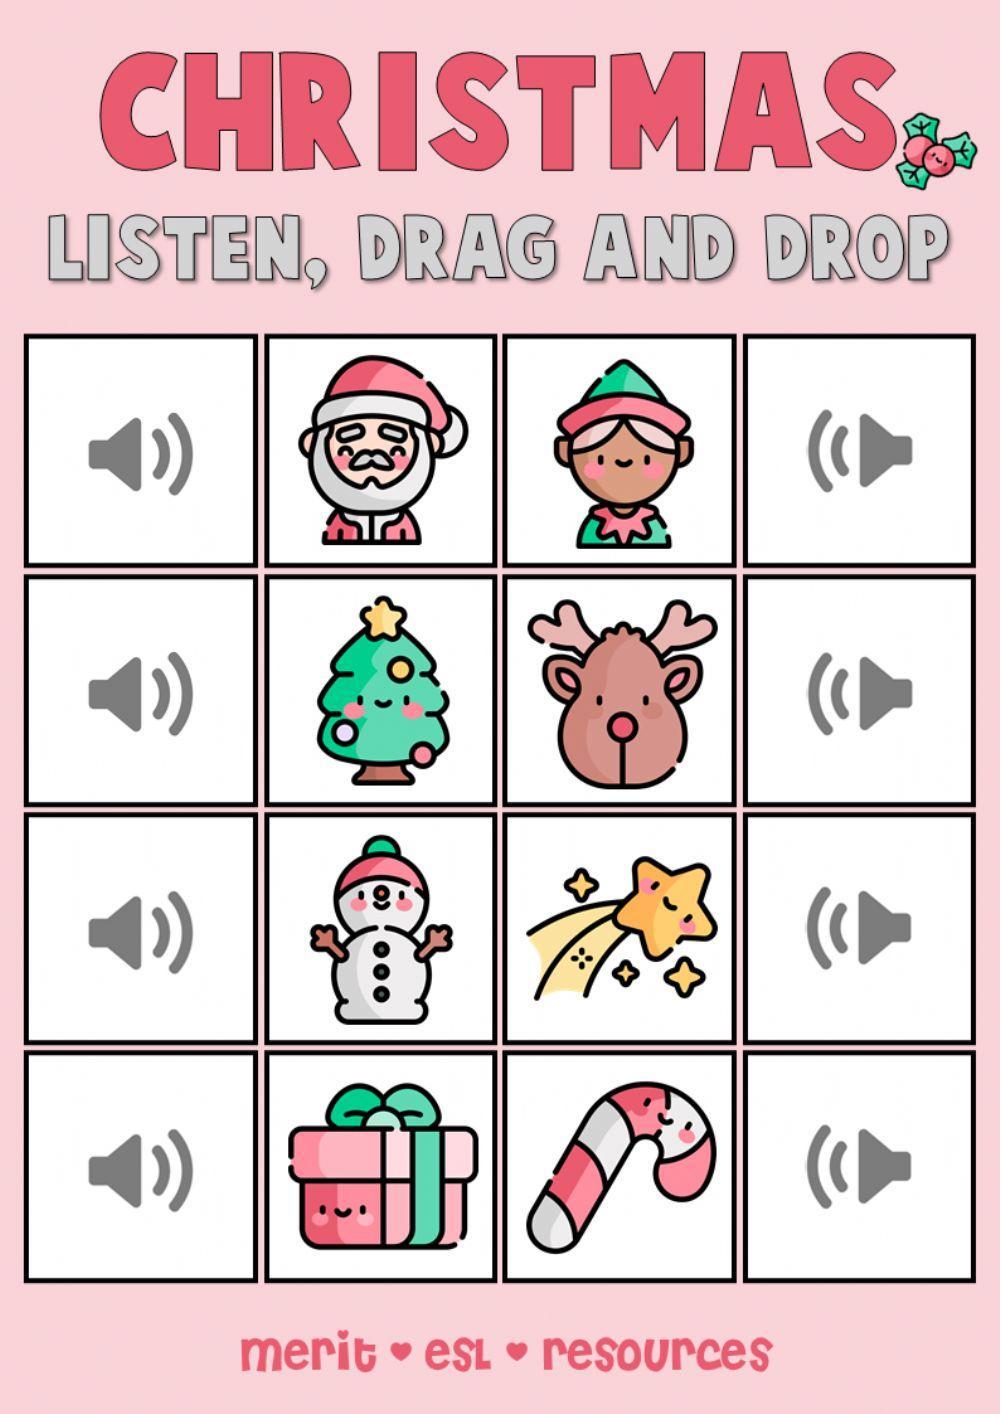 Christmas - Listen, drag and drop